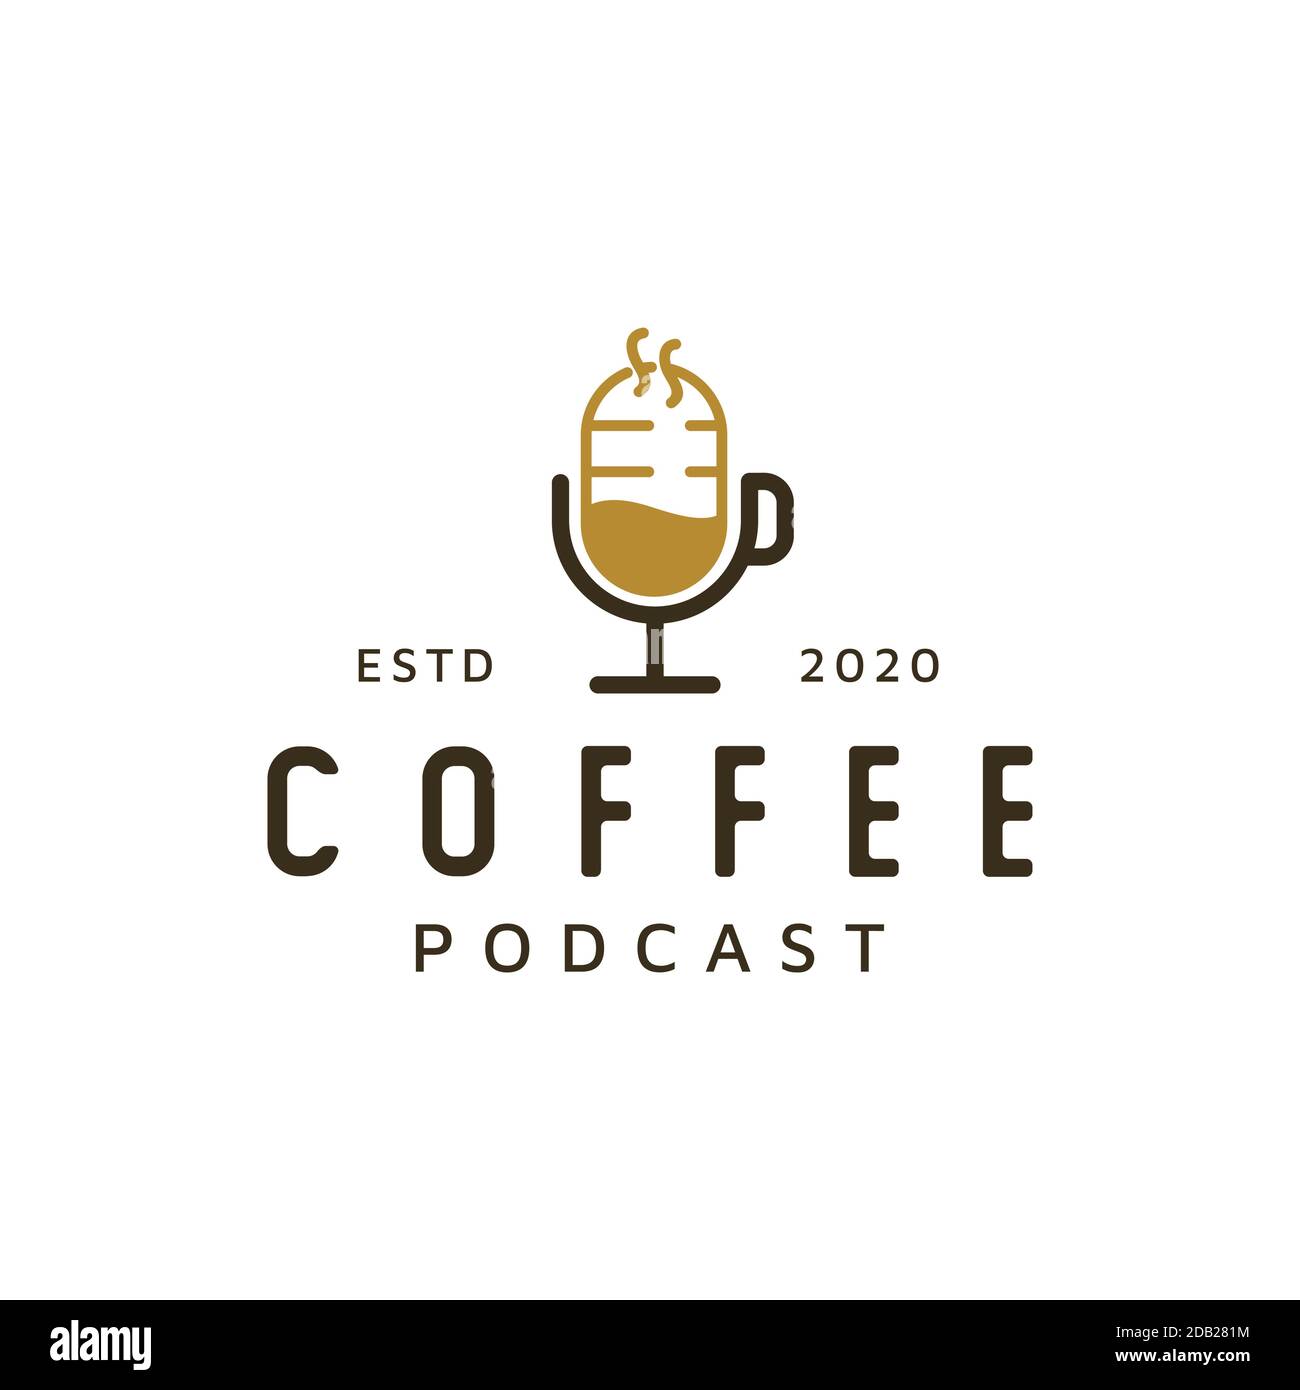 Coffee Podcast Logo Design inspiration Stock Vector